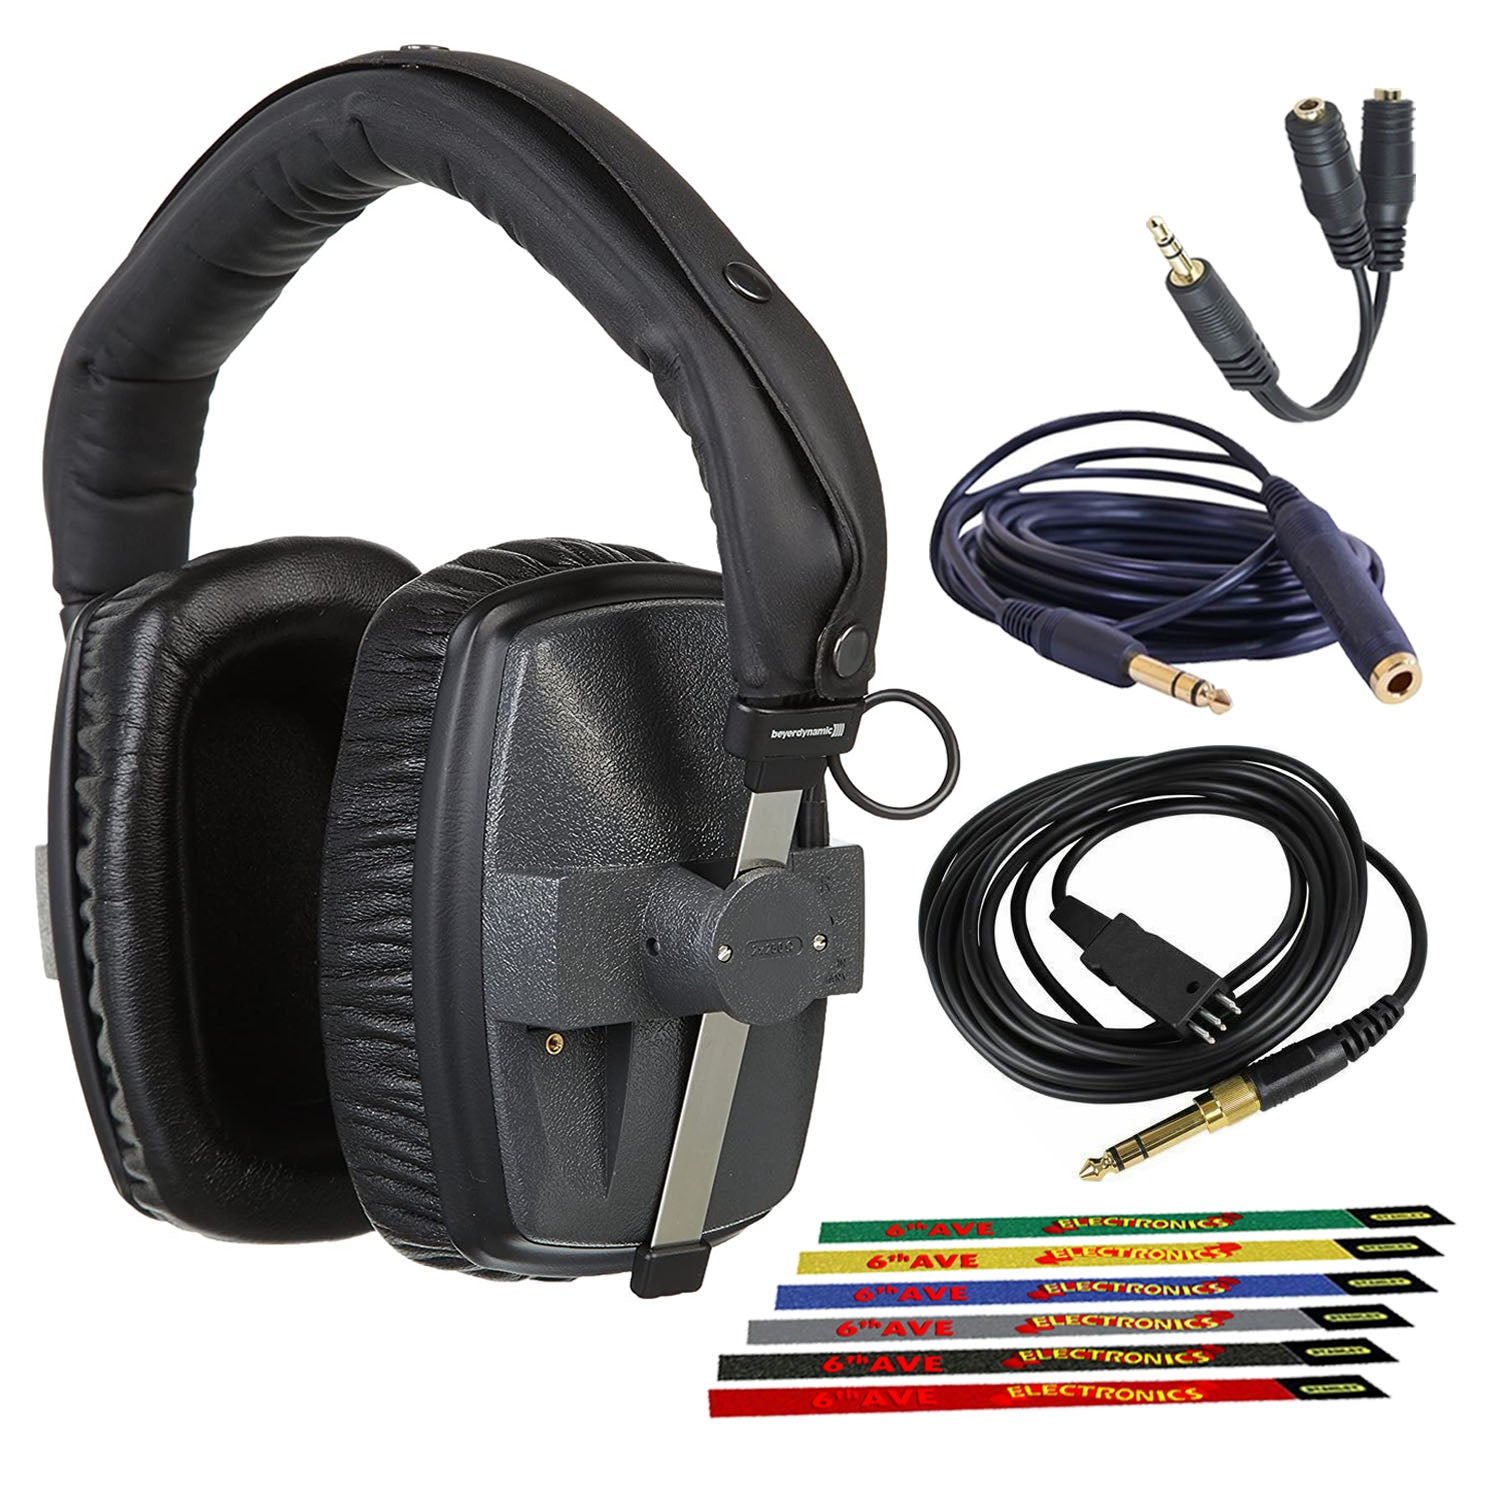 Beyerdynamic DT 150 250 Ohm Closed Dynamic Headphones Bundle with Cleaning Kit